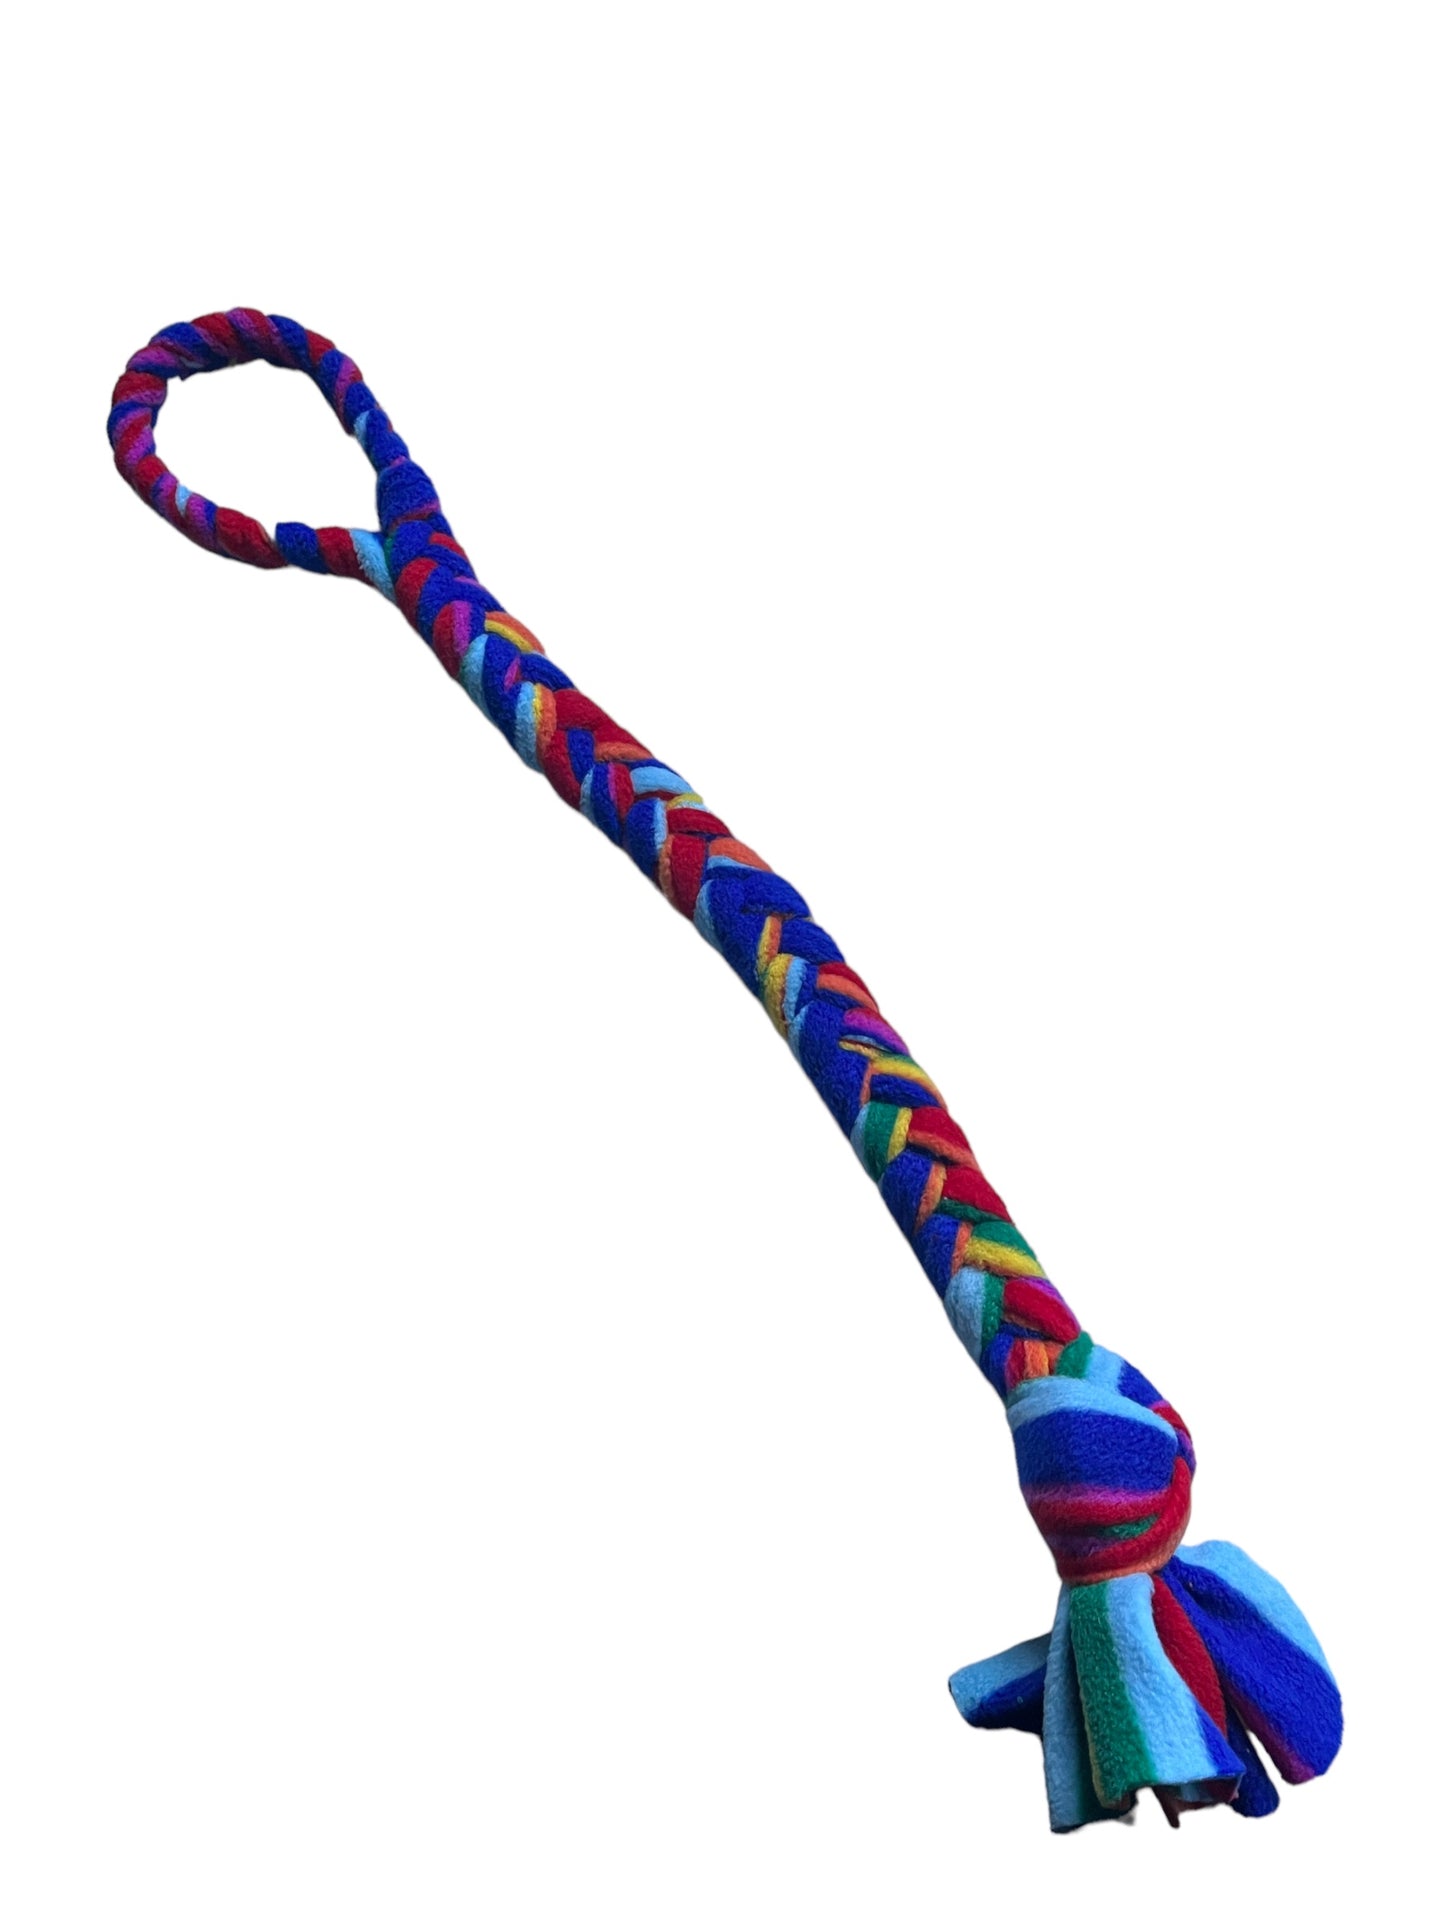 Rainbow Handled plated tug toy